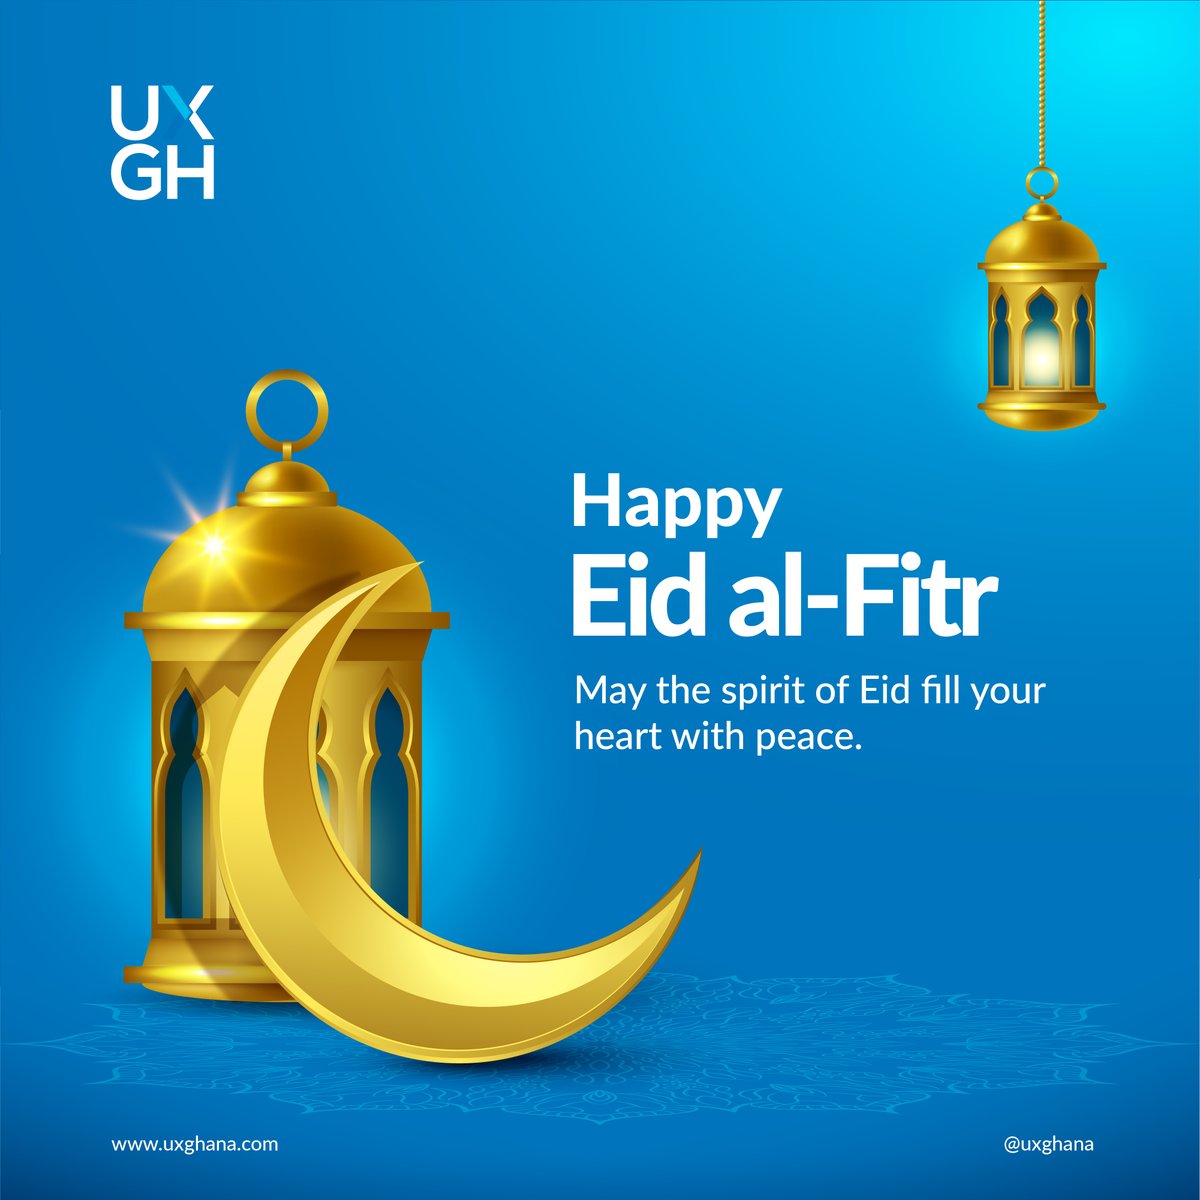 May the spirit of Eid fill your life with peace, happiness, and prosperity. Wishing you a wonderful Eid Mubarak! #EidMubarak #EidAlFitr #BlessedEid #uxghana